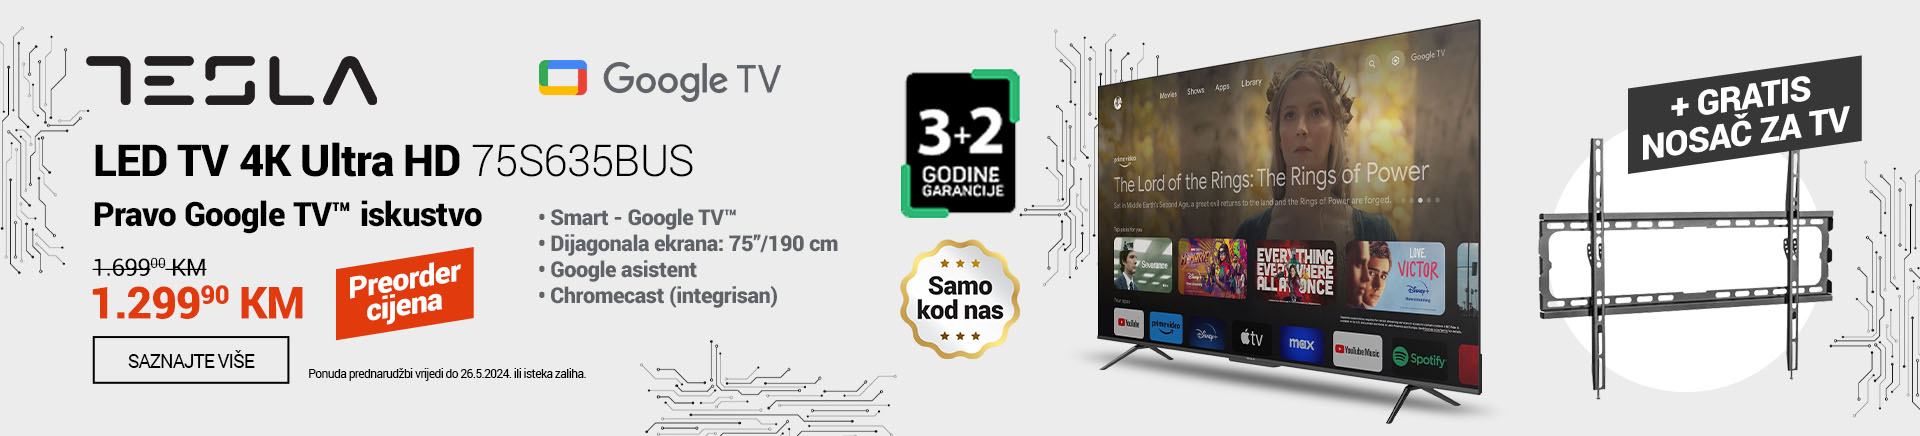 BA TESLA LED TV 4K Ultra HD 75S635BUS MOBILE 380 X 436.jpg